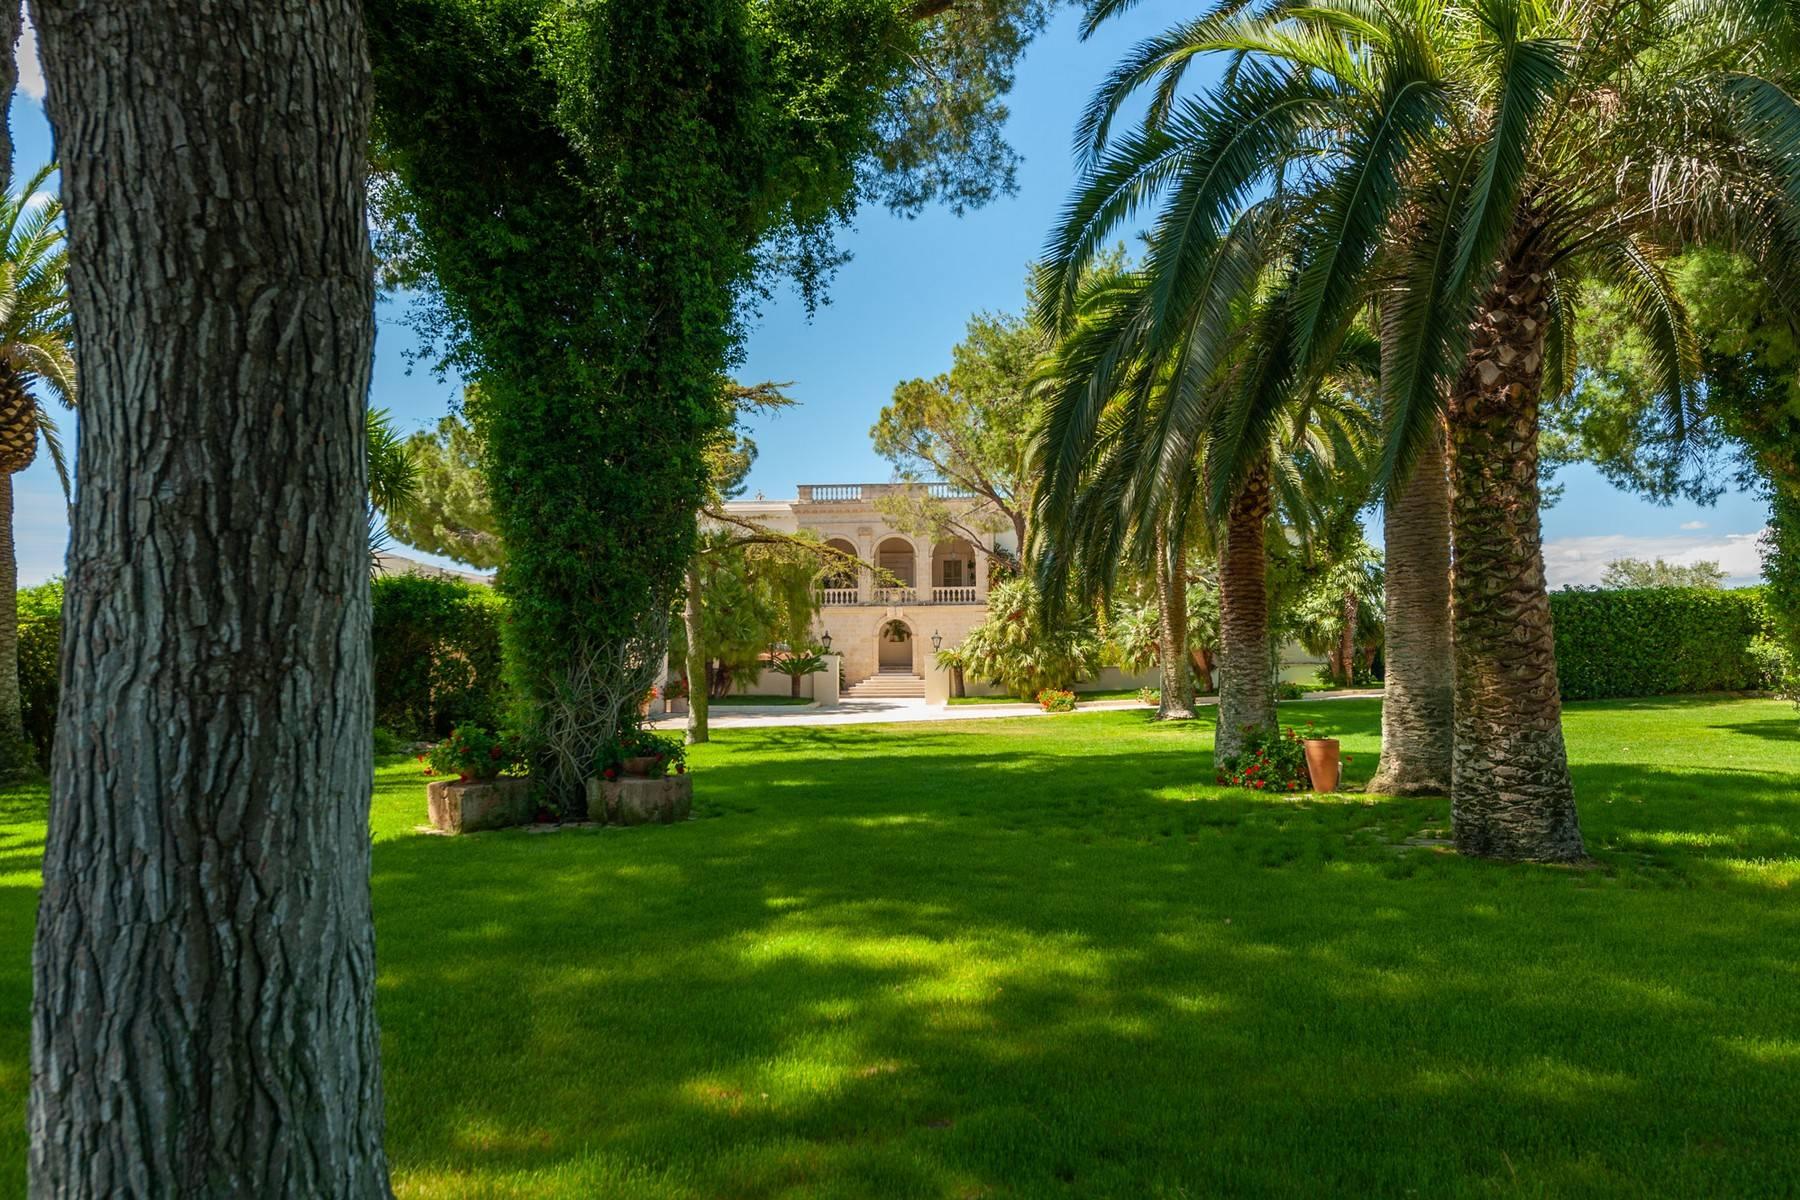 Splendid 17th century noble villa surrounded by citrus groves - 3